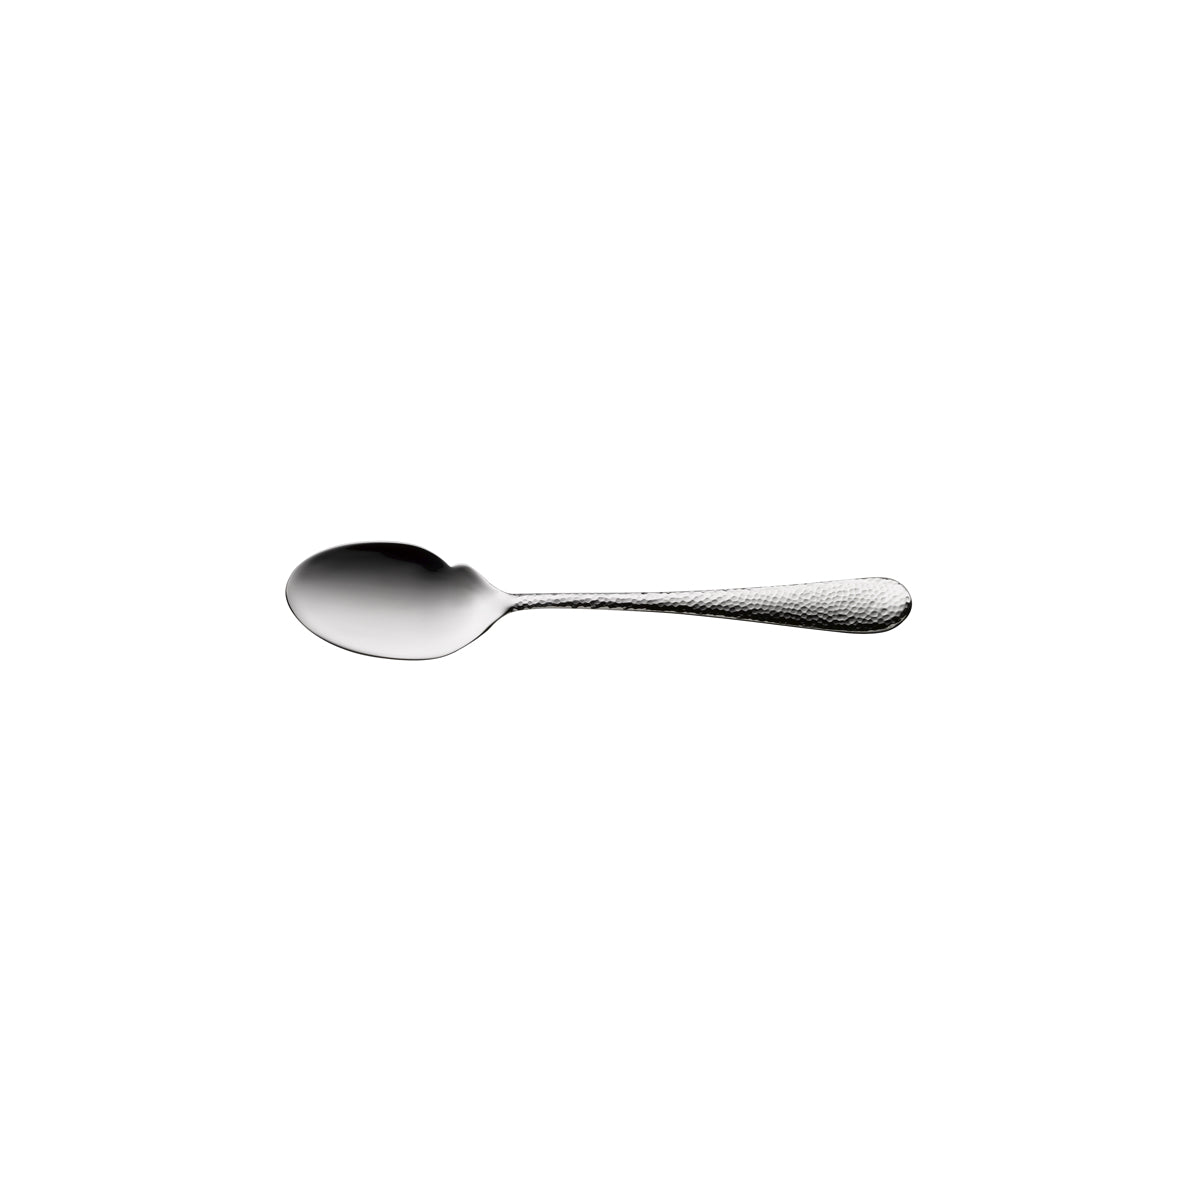 54.5011.6030 WMF Sitello Gourmet Spoon Silverplated Tomkin Australia Hospitality Supplies